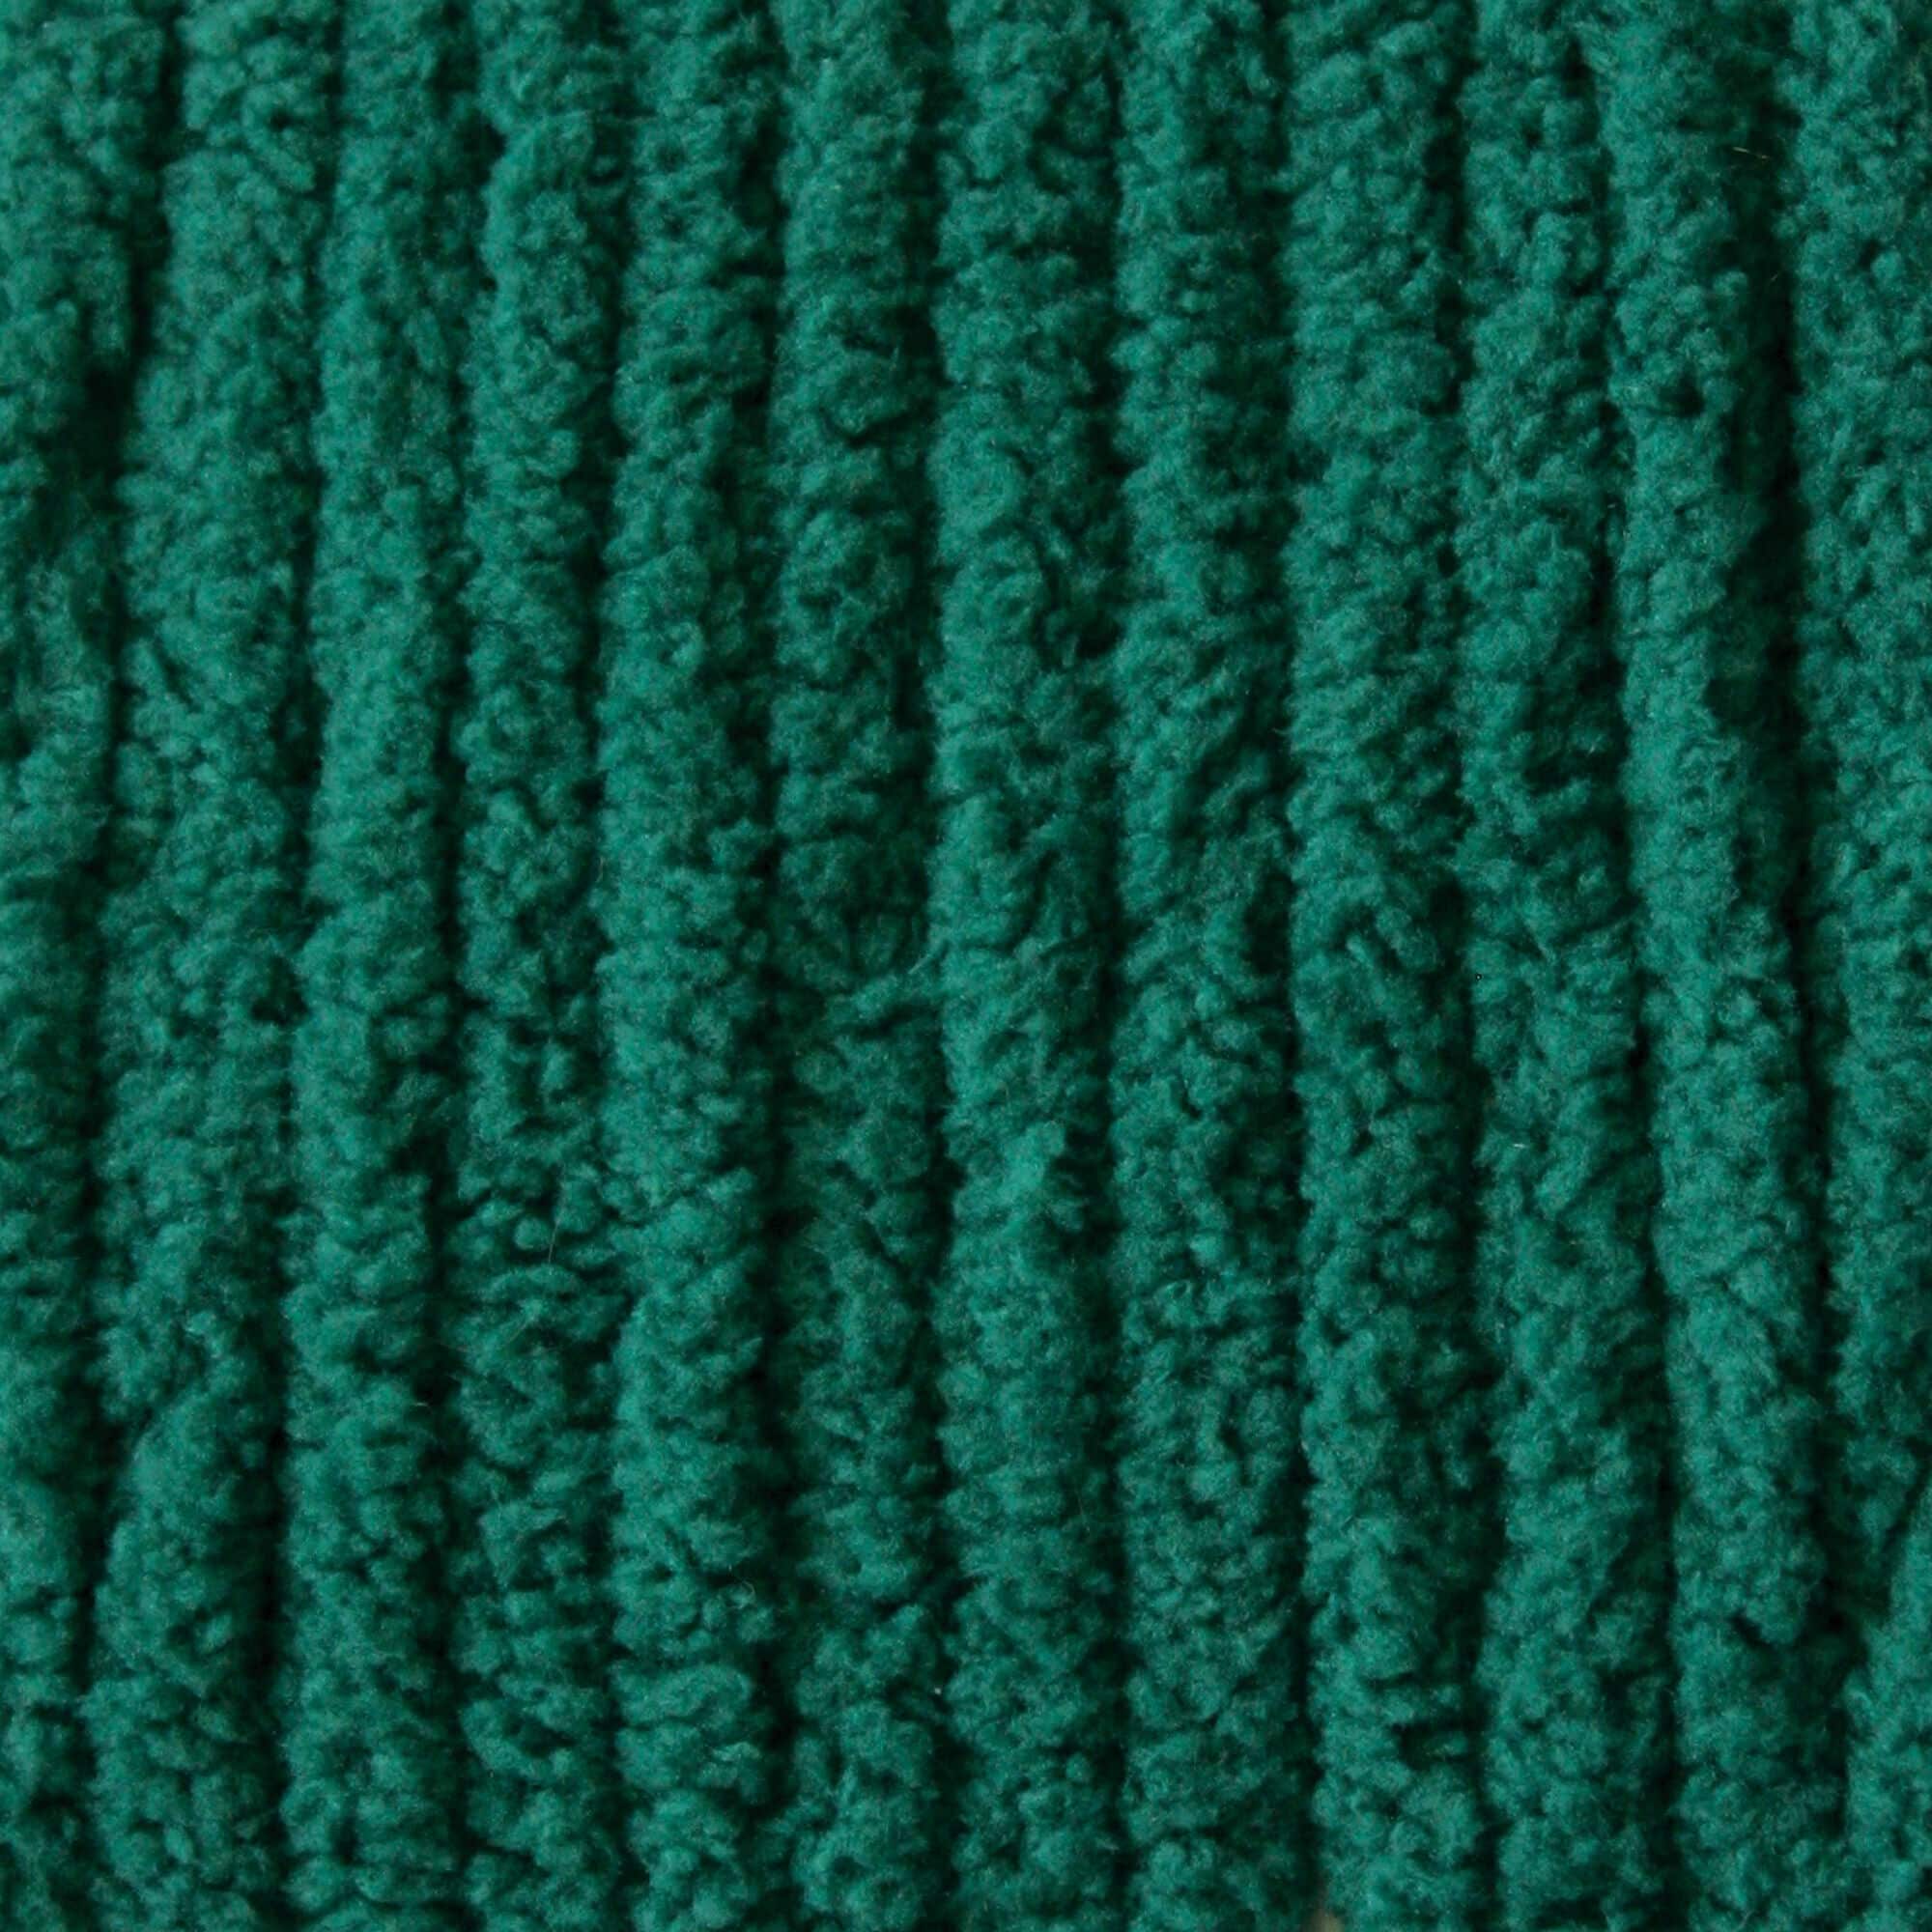 Bernat Blanket Big Ball Yarn Size 6-Malachite